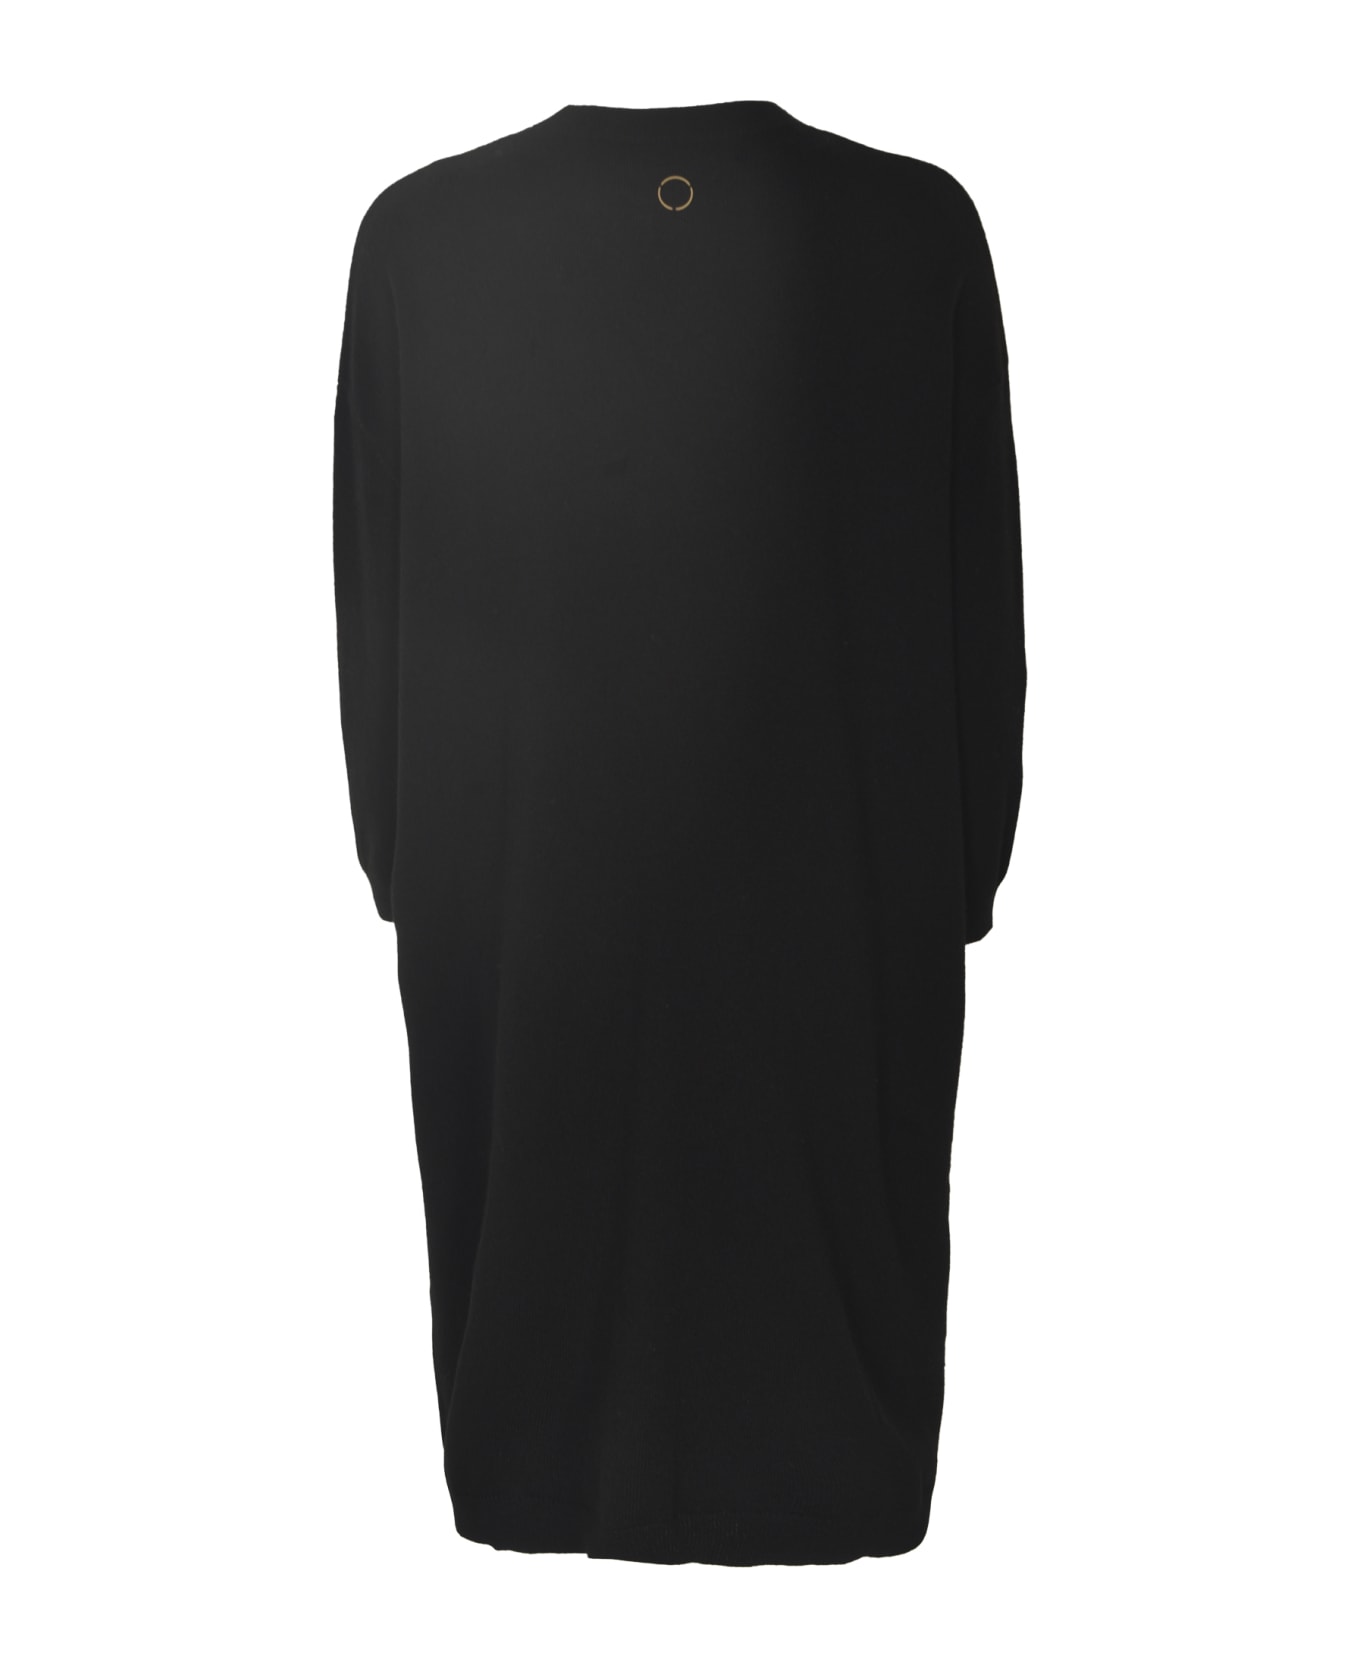 Oyuna Round Neck Oversized Dress - Black